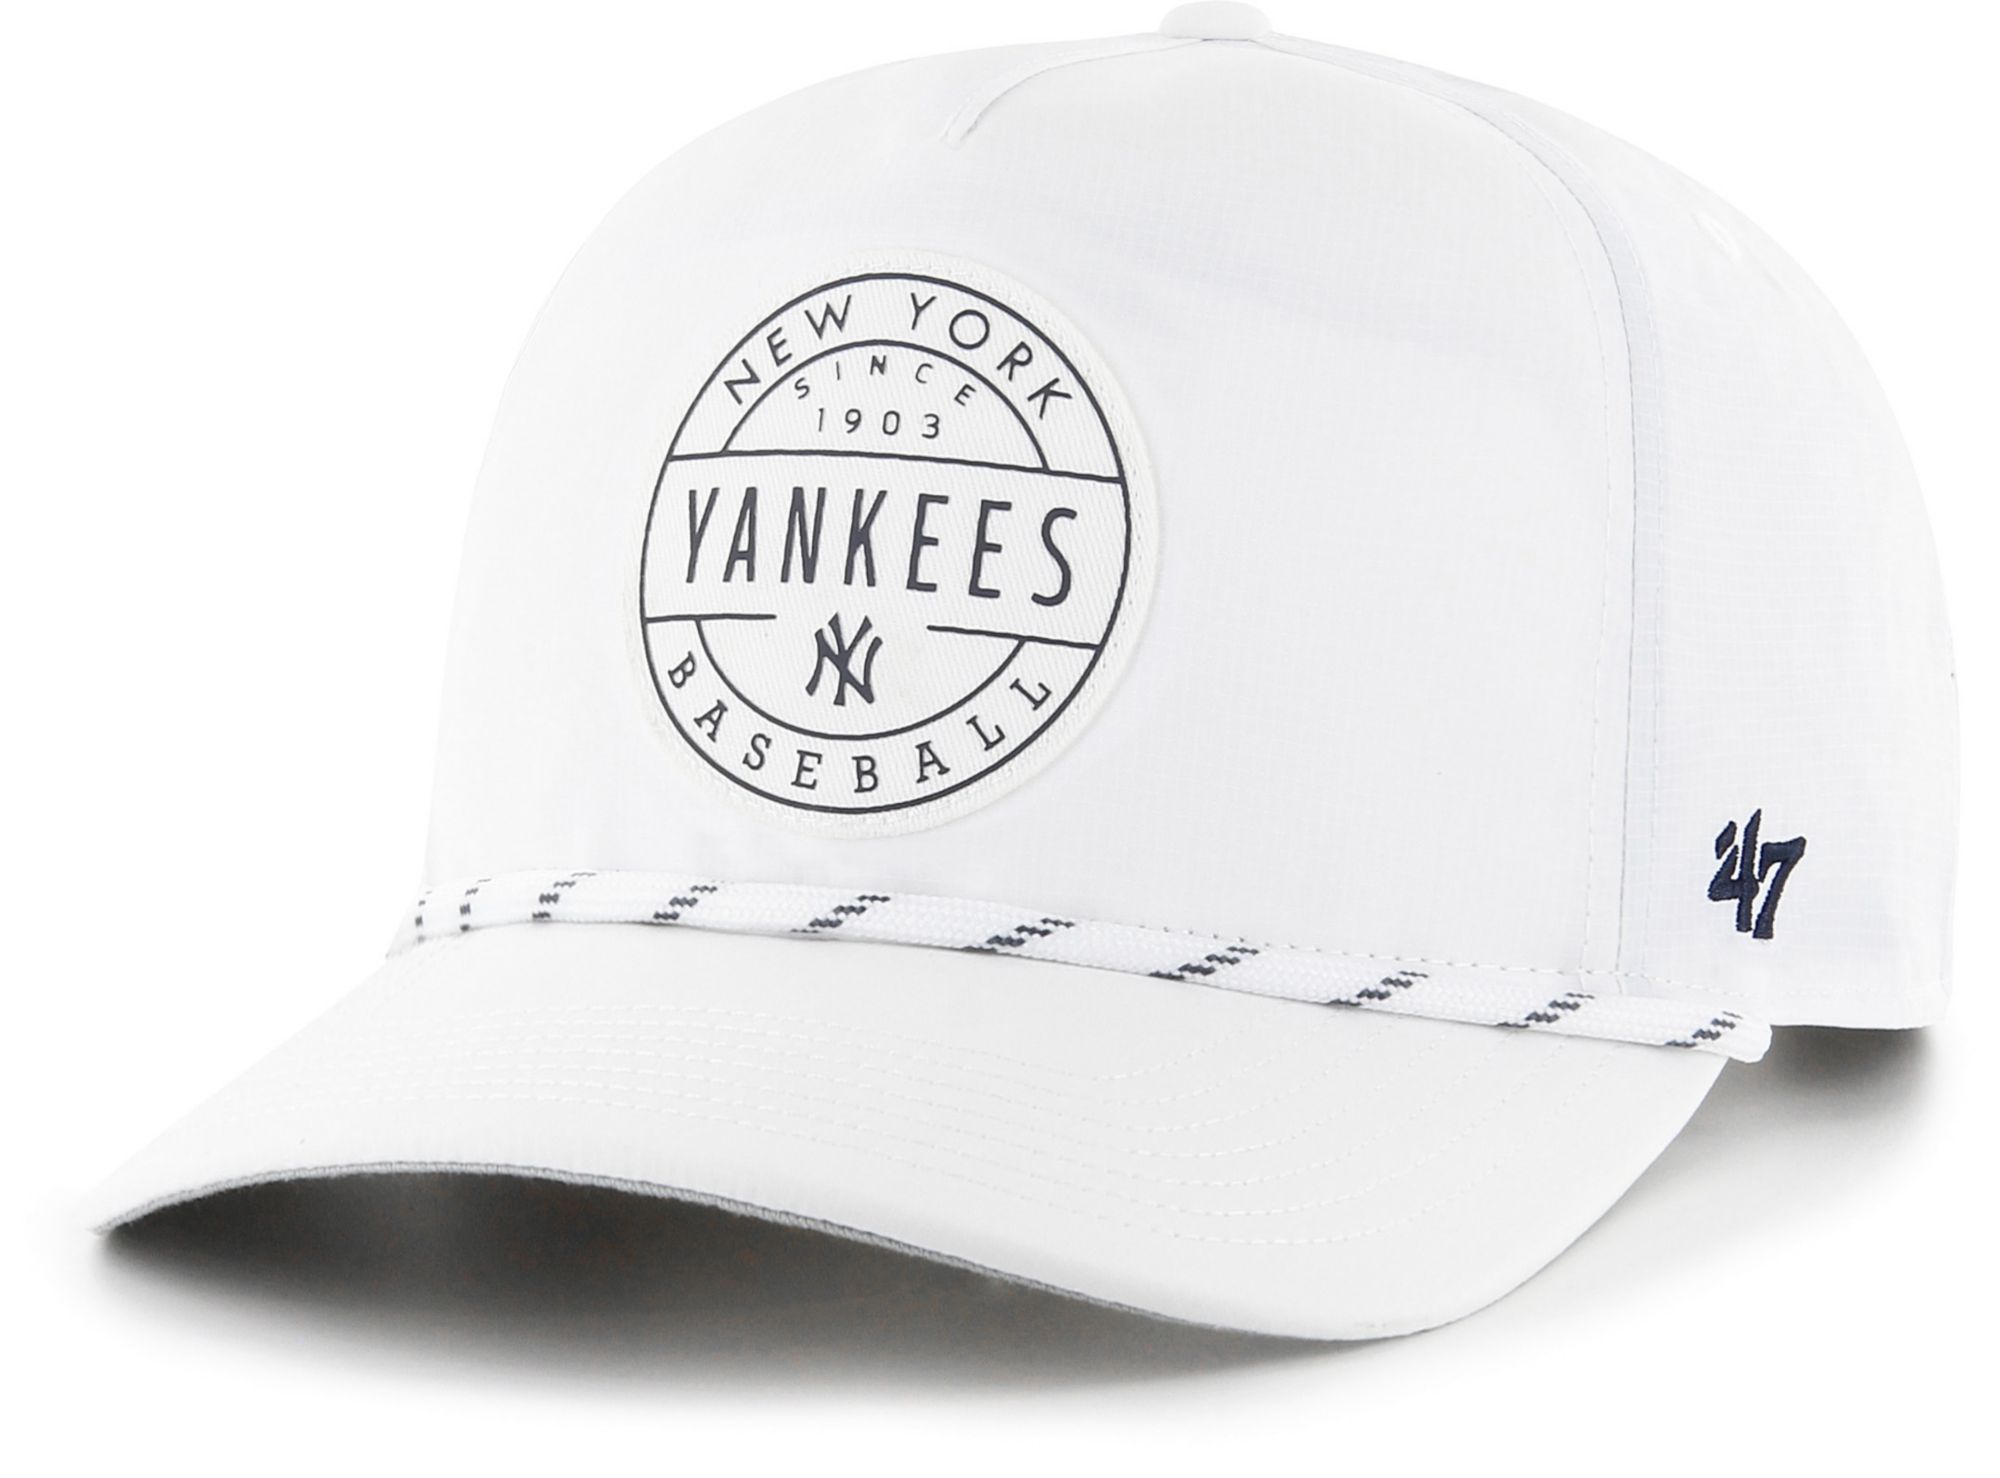 New York Yankees Women's Casey Hat